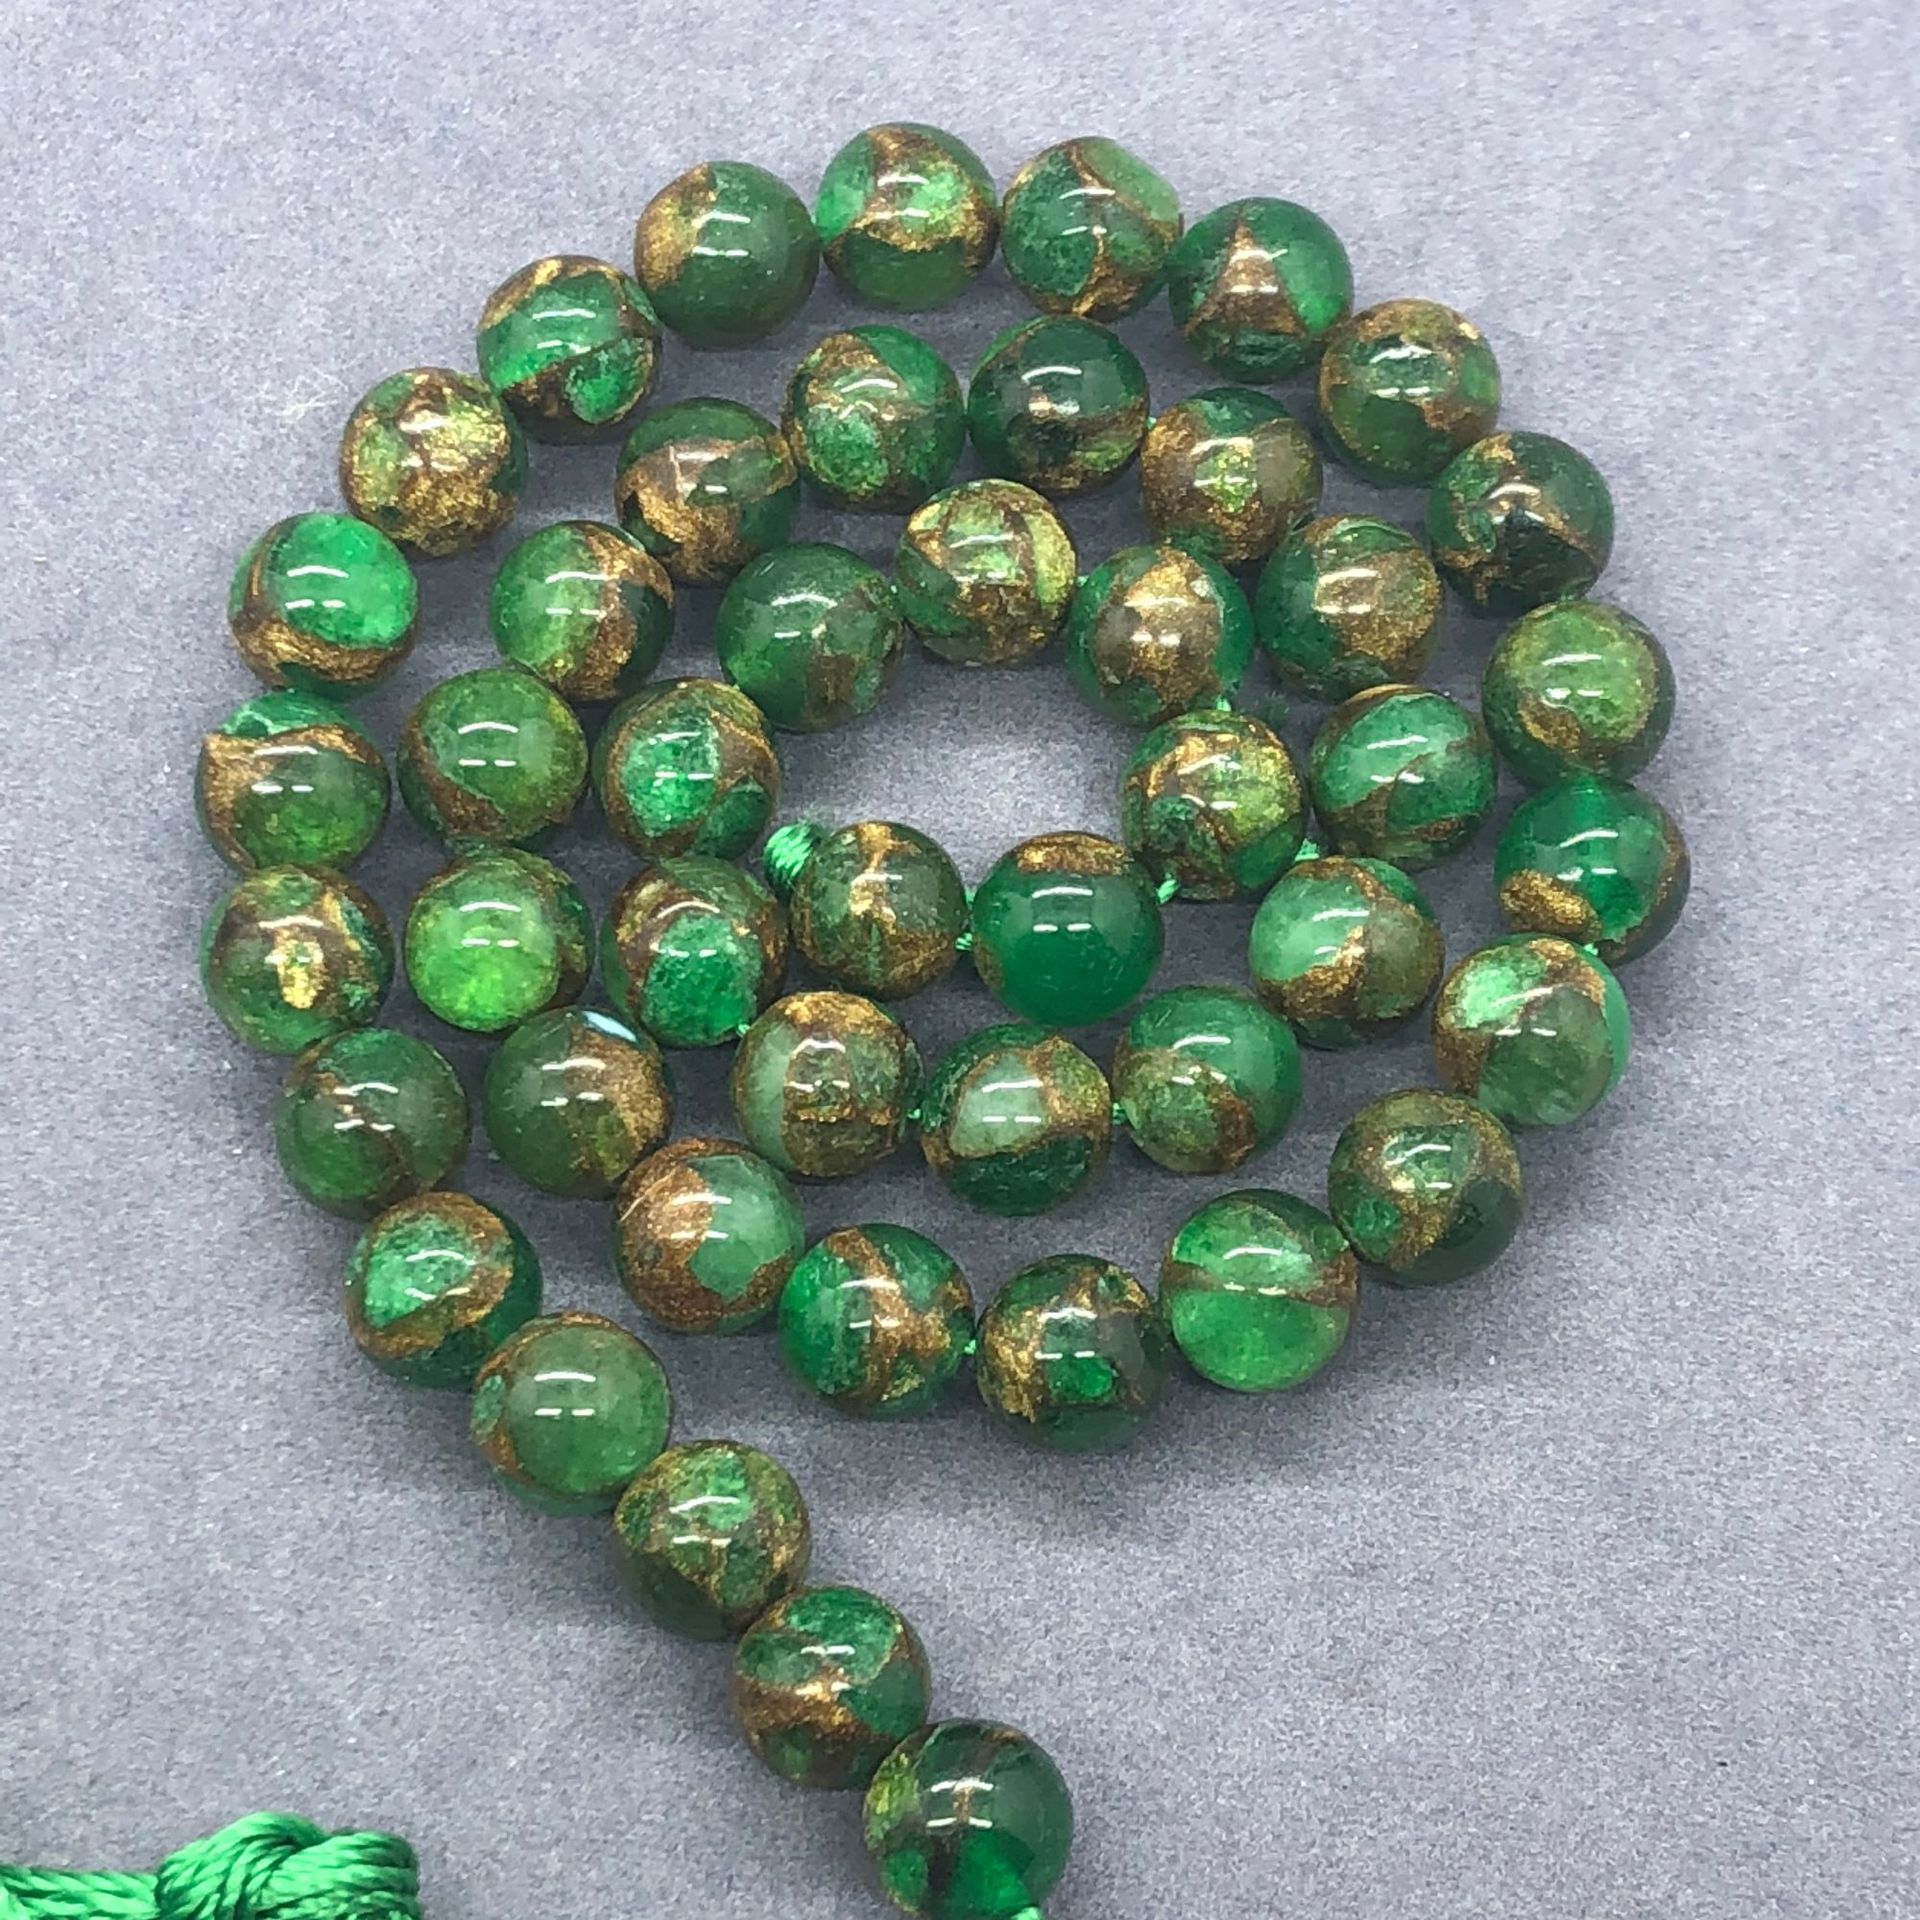 No. 3 green 10mm (≈38 pieces)